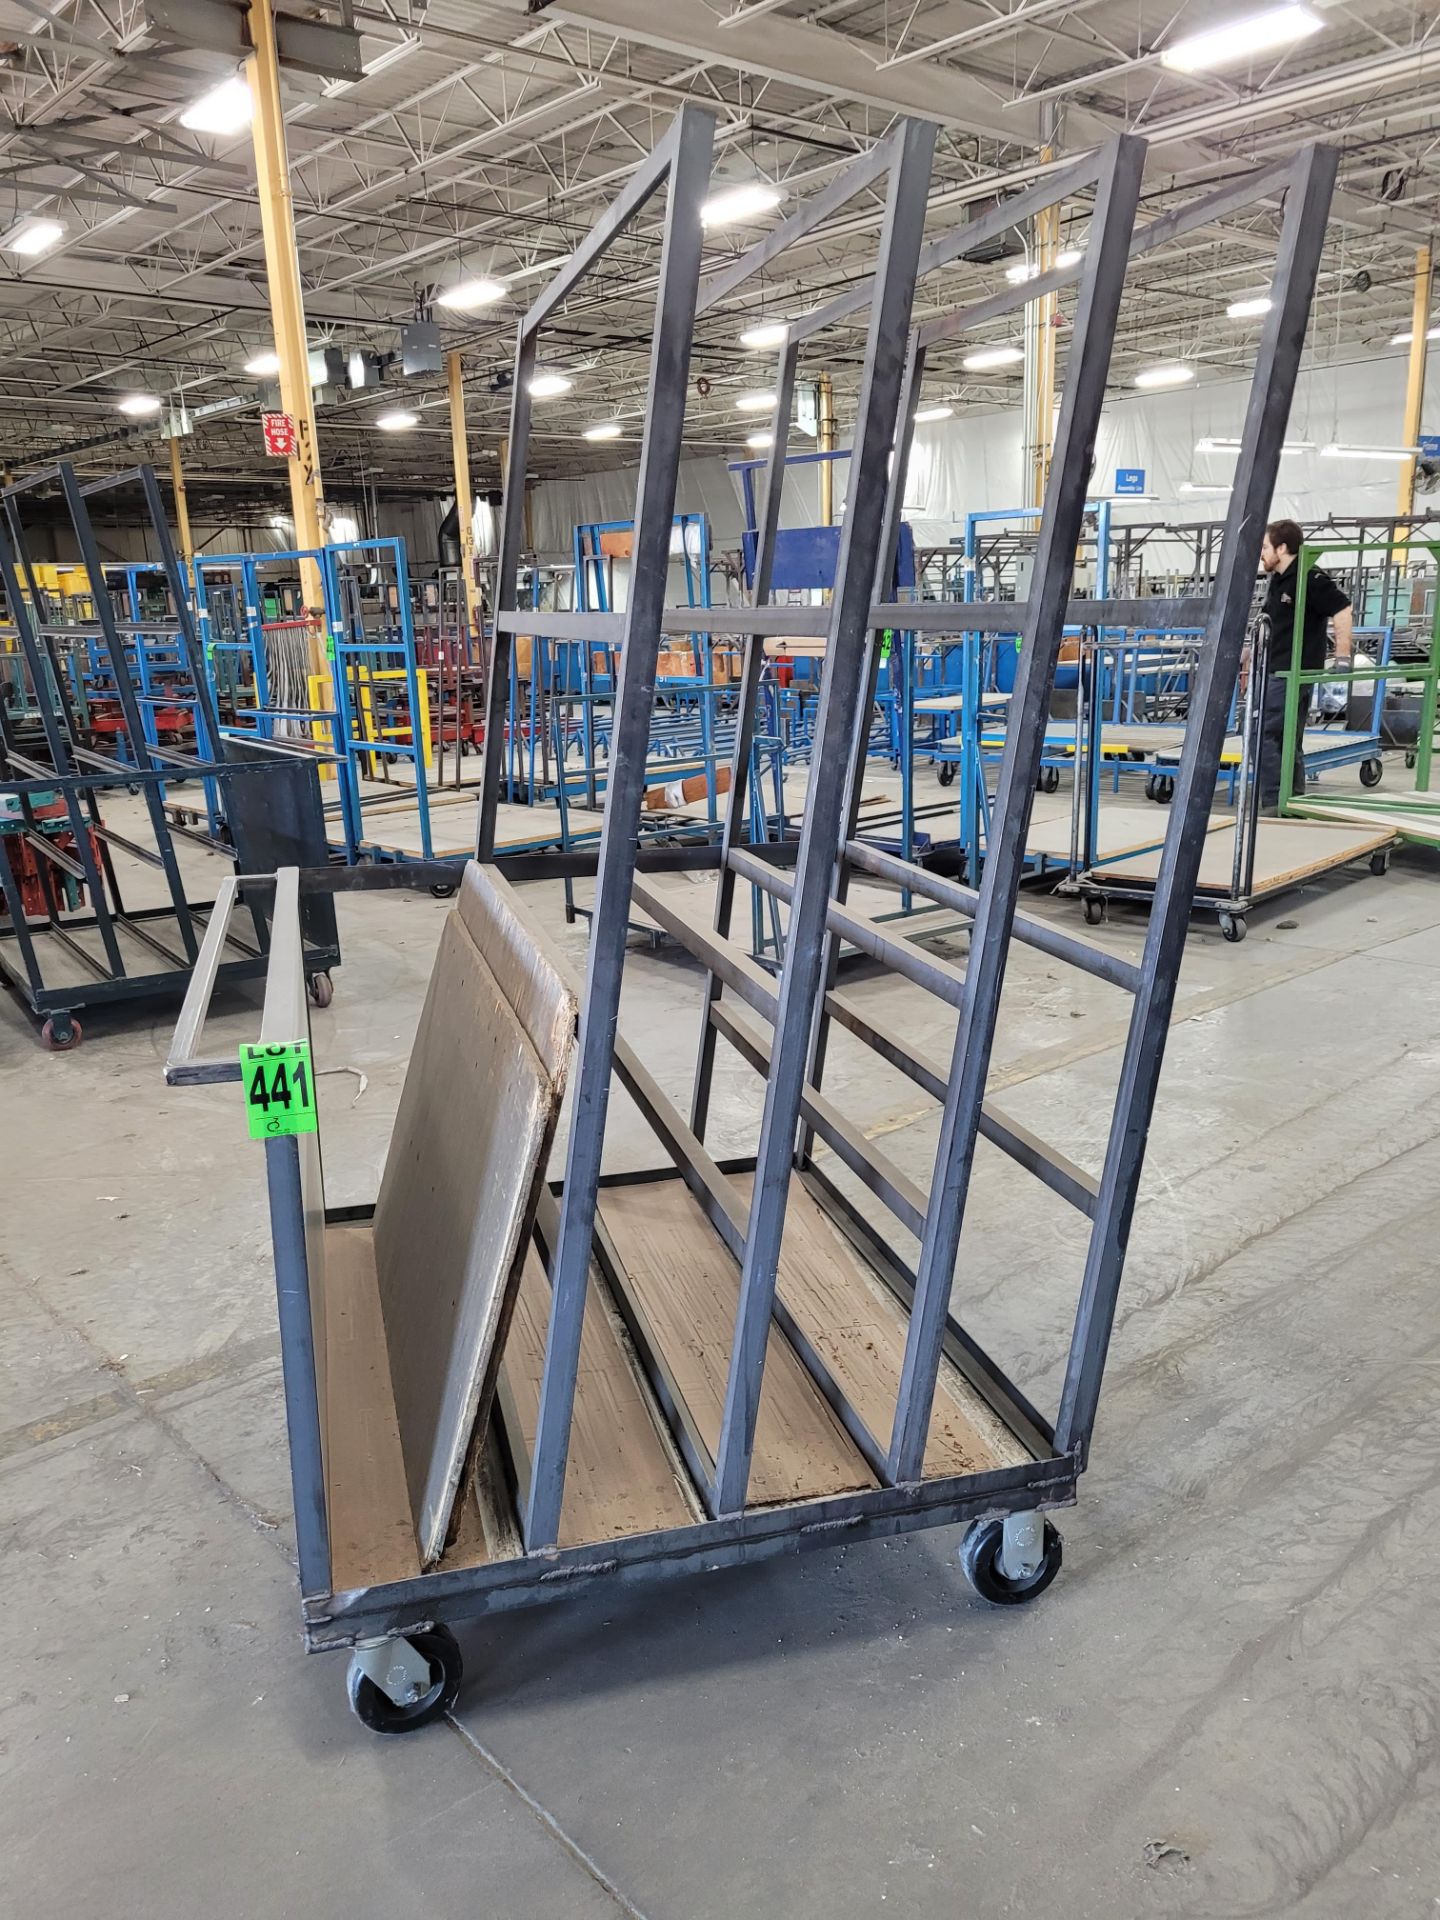 Steel frame 4-slot, 3-sided panel transfer cart w/ handle on casters, wooden base/side